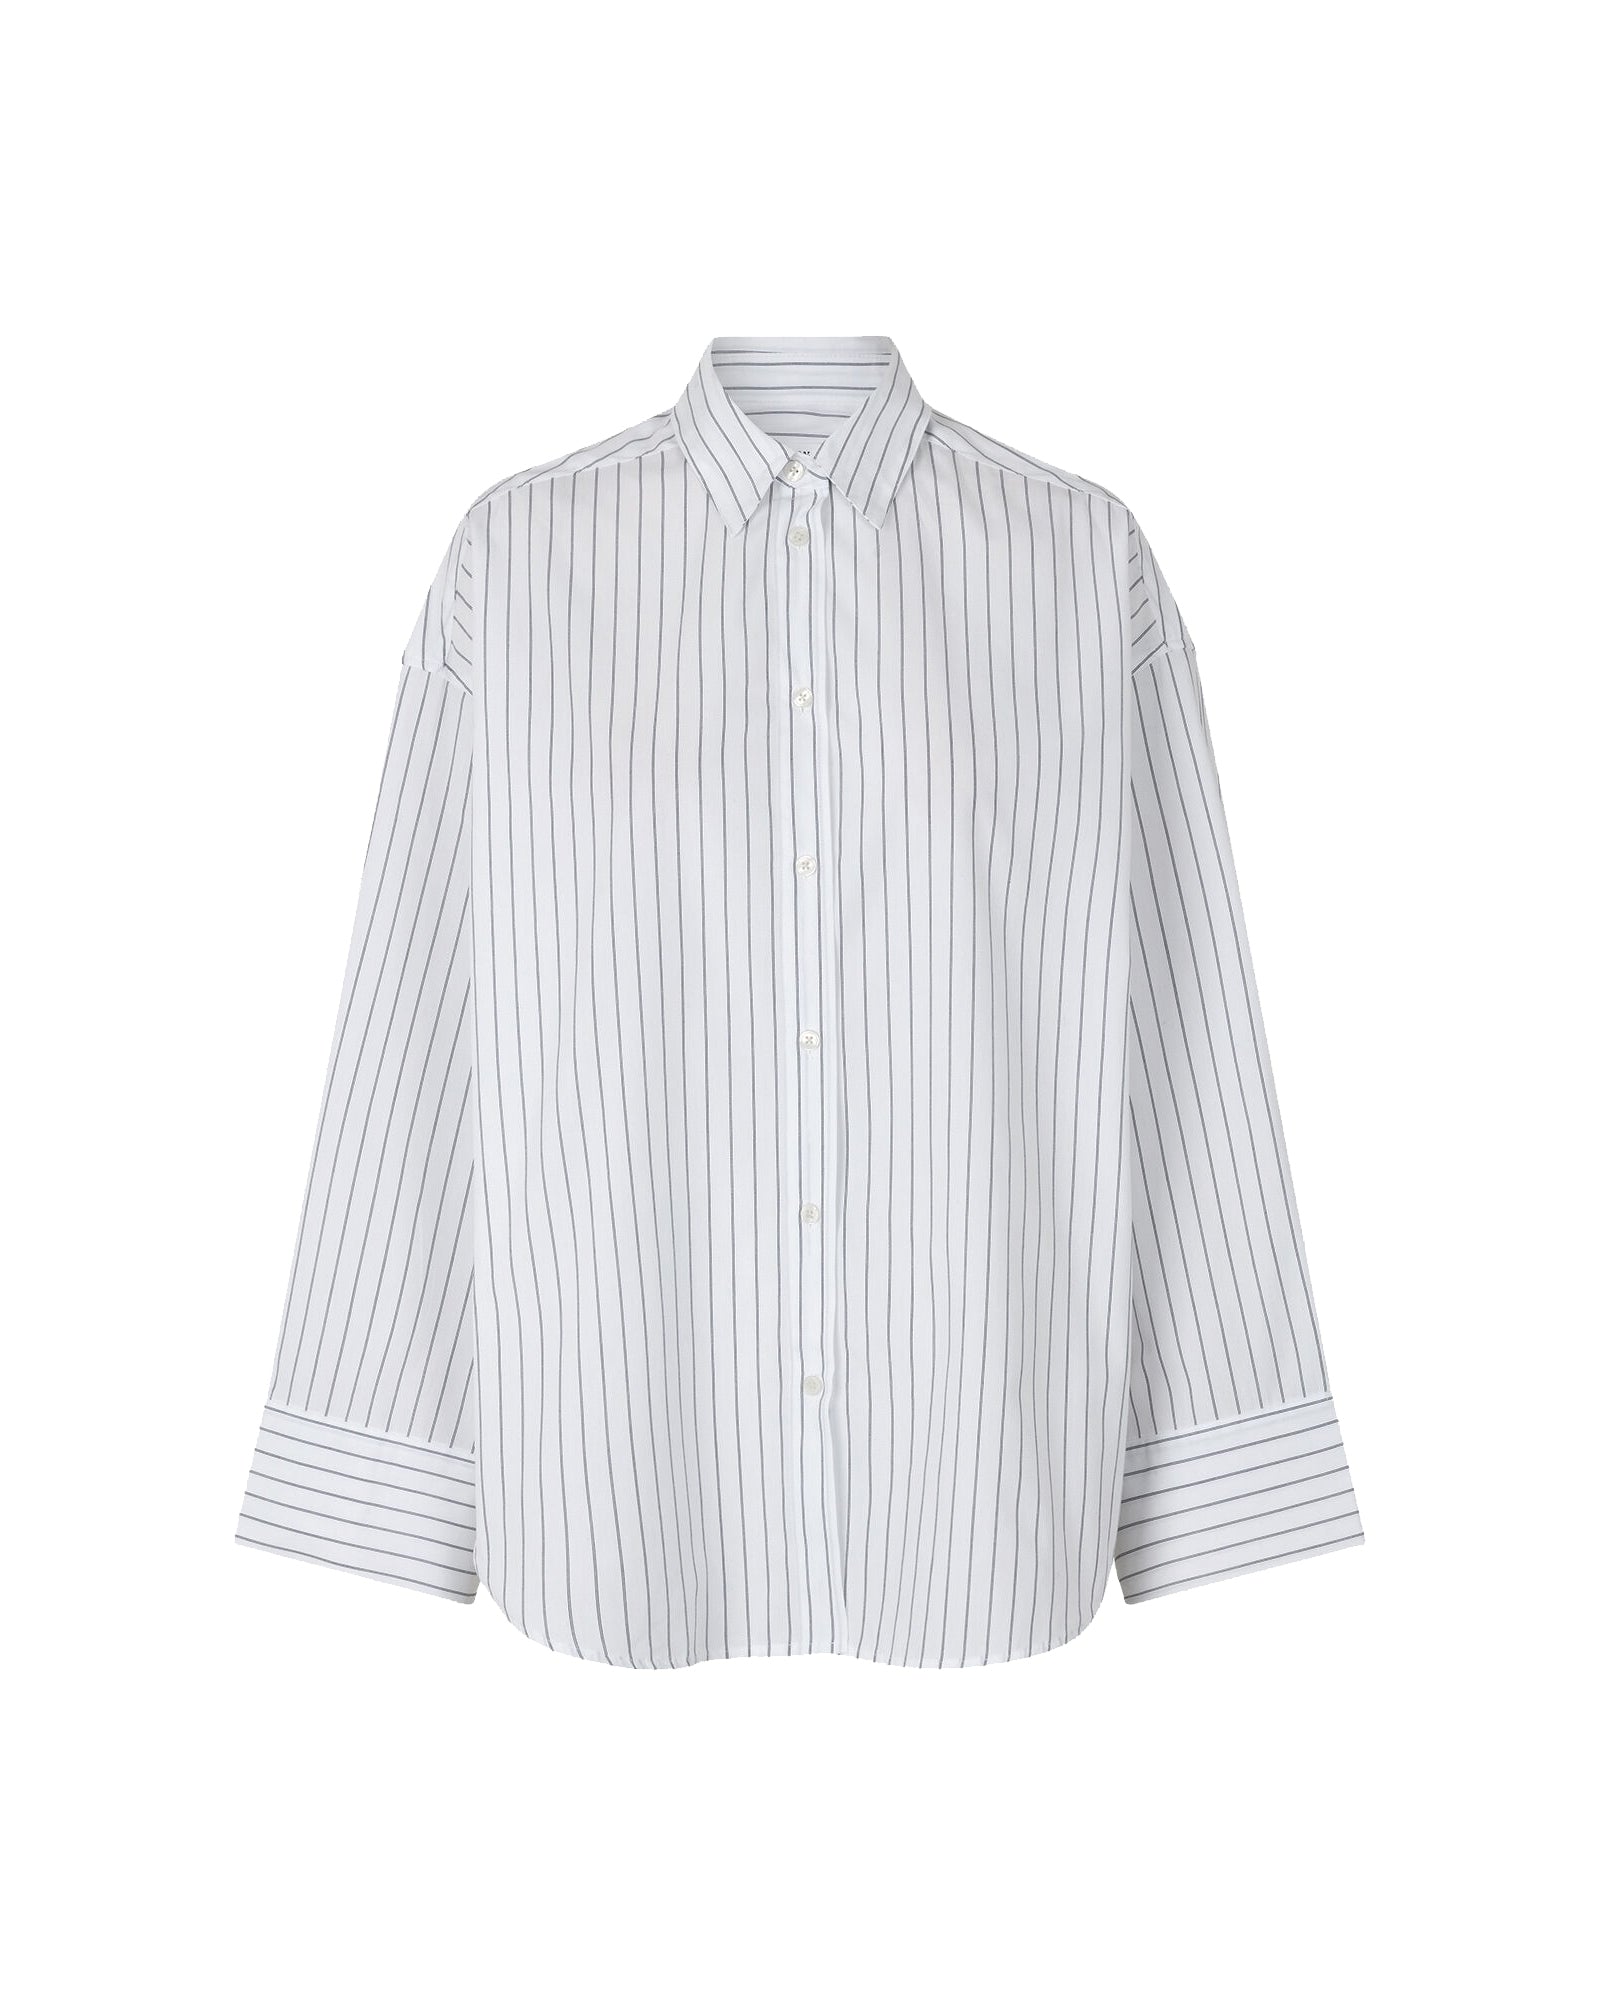 Marika shirt 13072 - Bright white st.